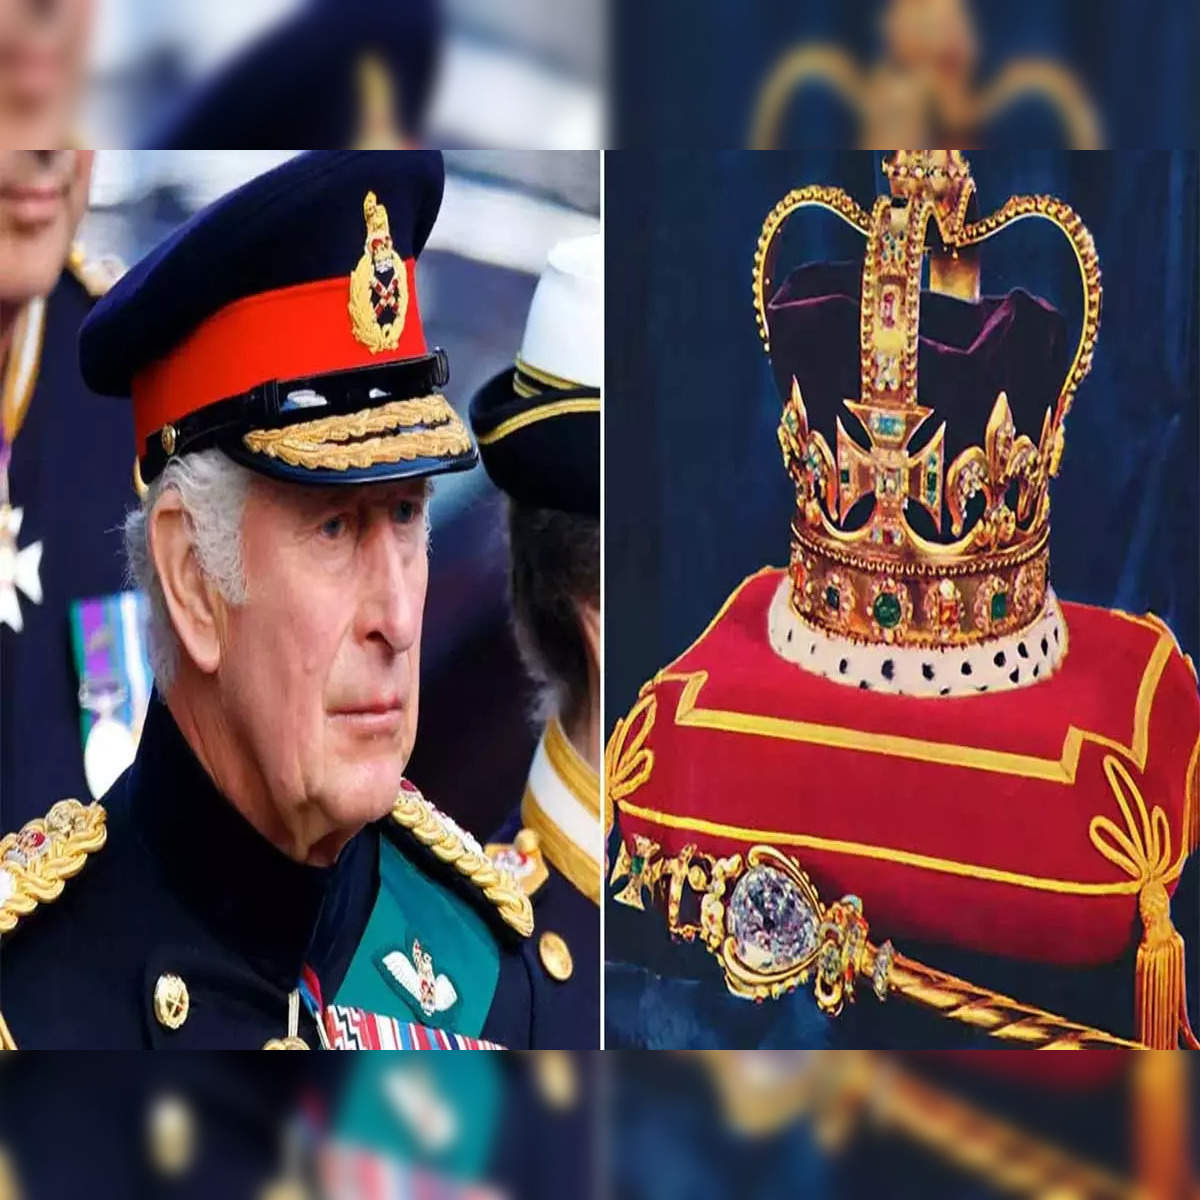 King Charles III Coronation Dress: What will King Charles III wear